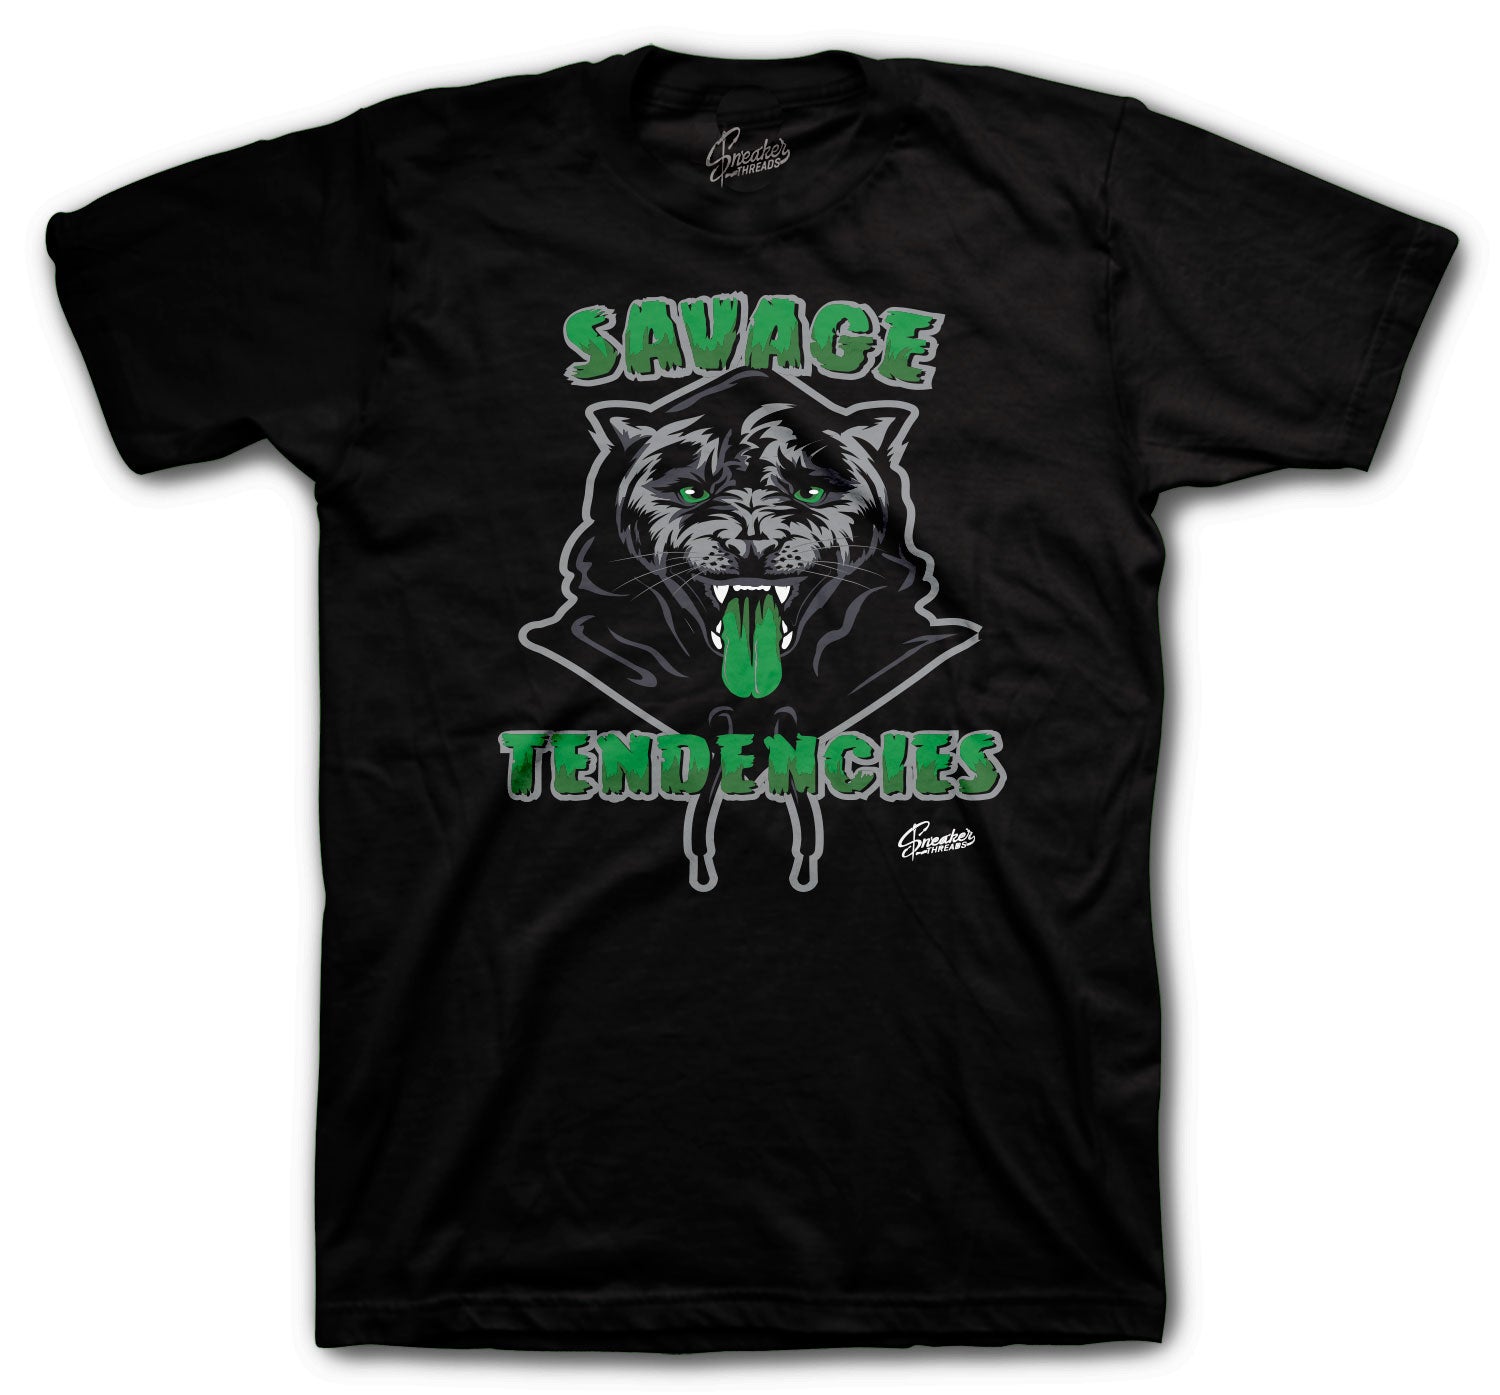 Retro 13 Lucky Green Shirt - Savage Tendencies - Black